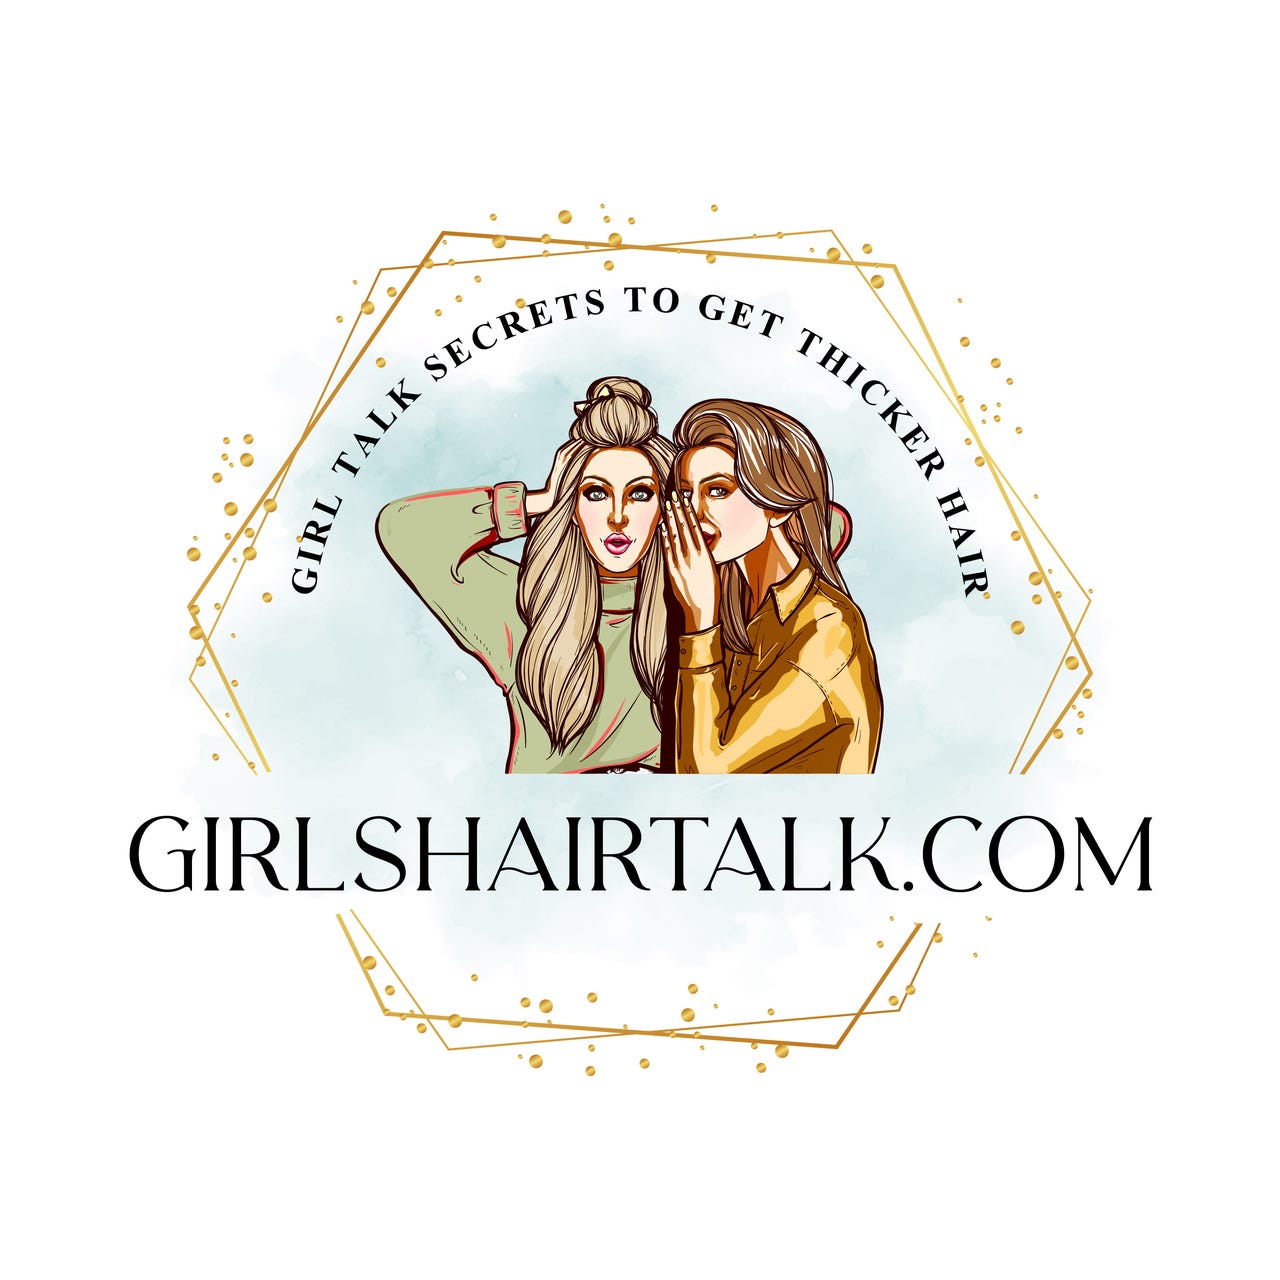 Girls Hair Talk Magazine ~ Secrets To Get Thicker Hair!